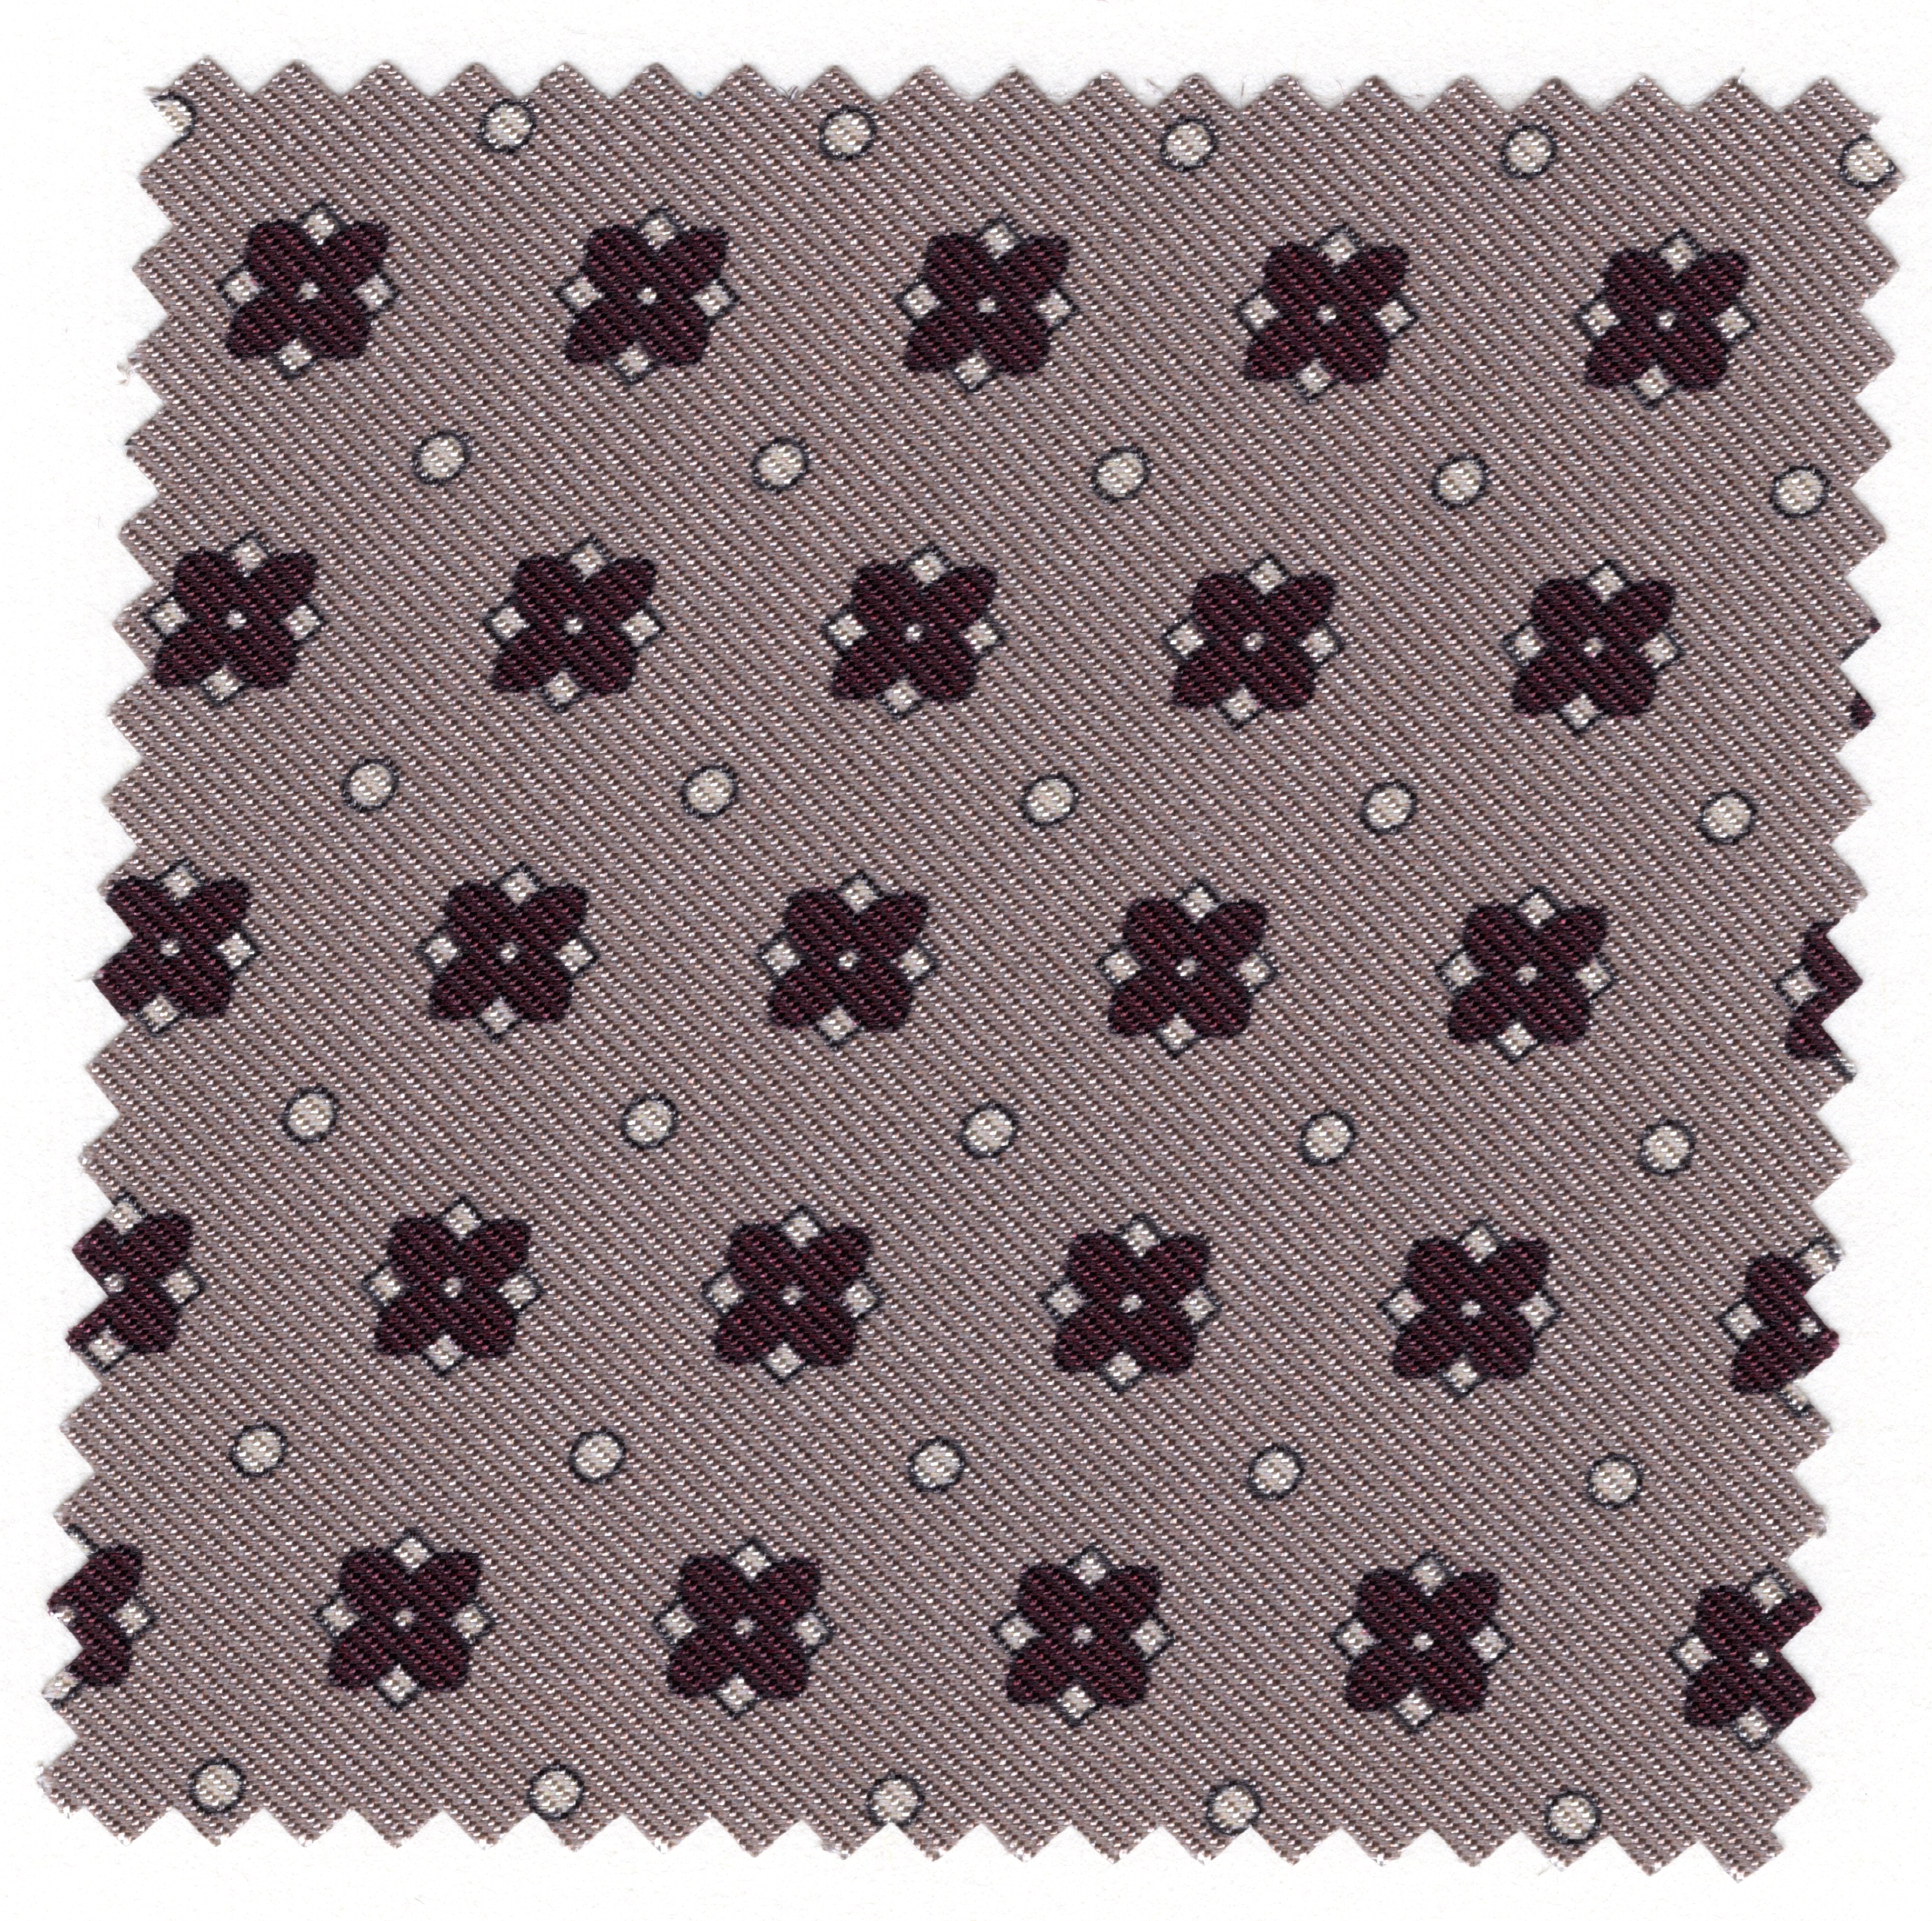 Tailored seven fold tie - micro pattern 9388-4